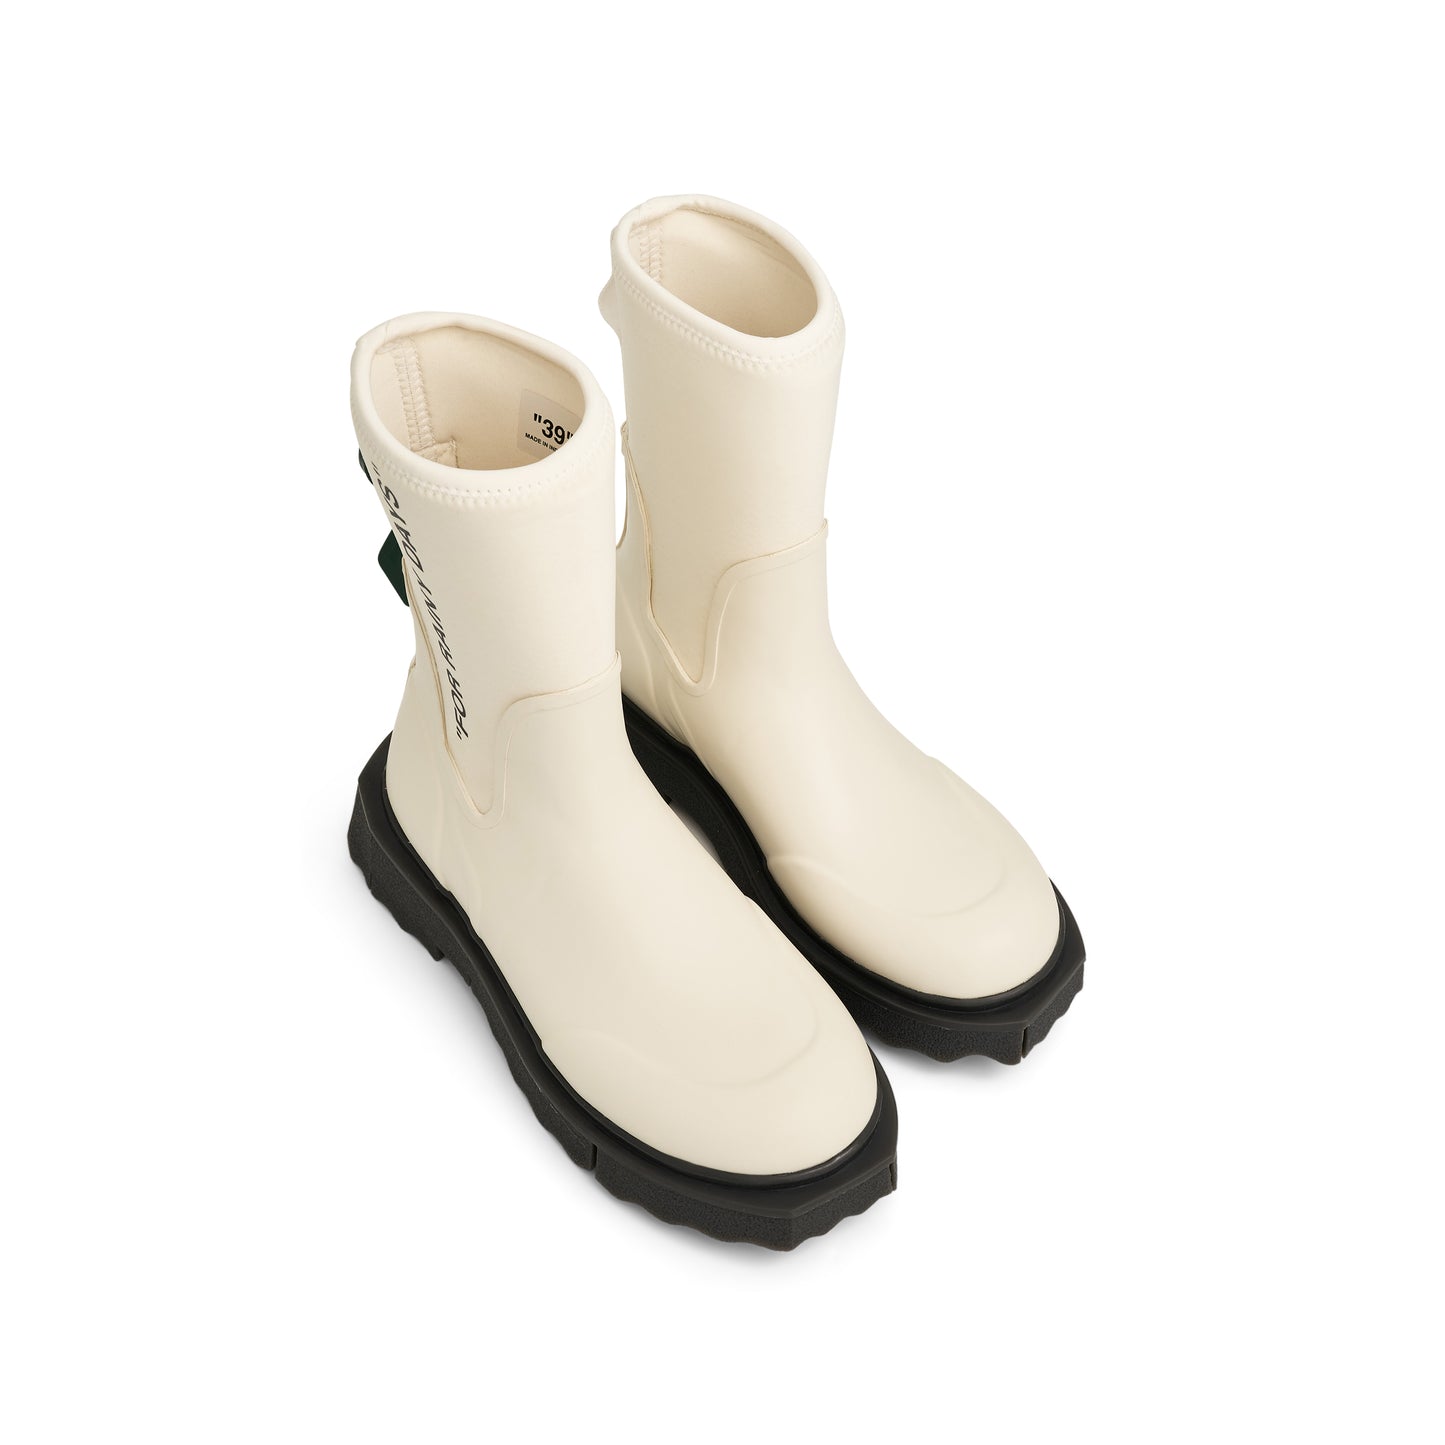 Sponge Rubber Rainboot Boots in White/Black